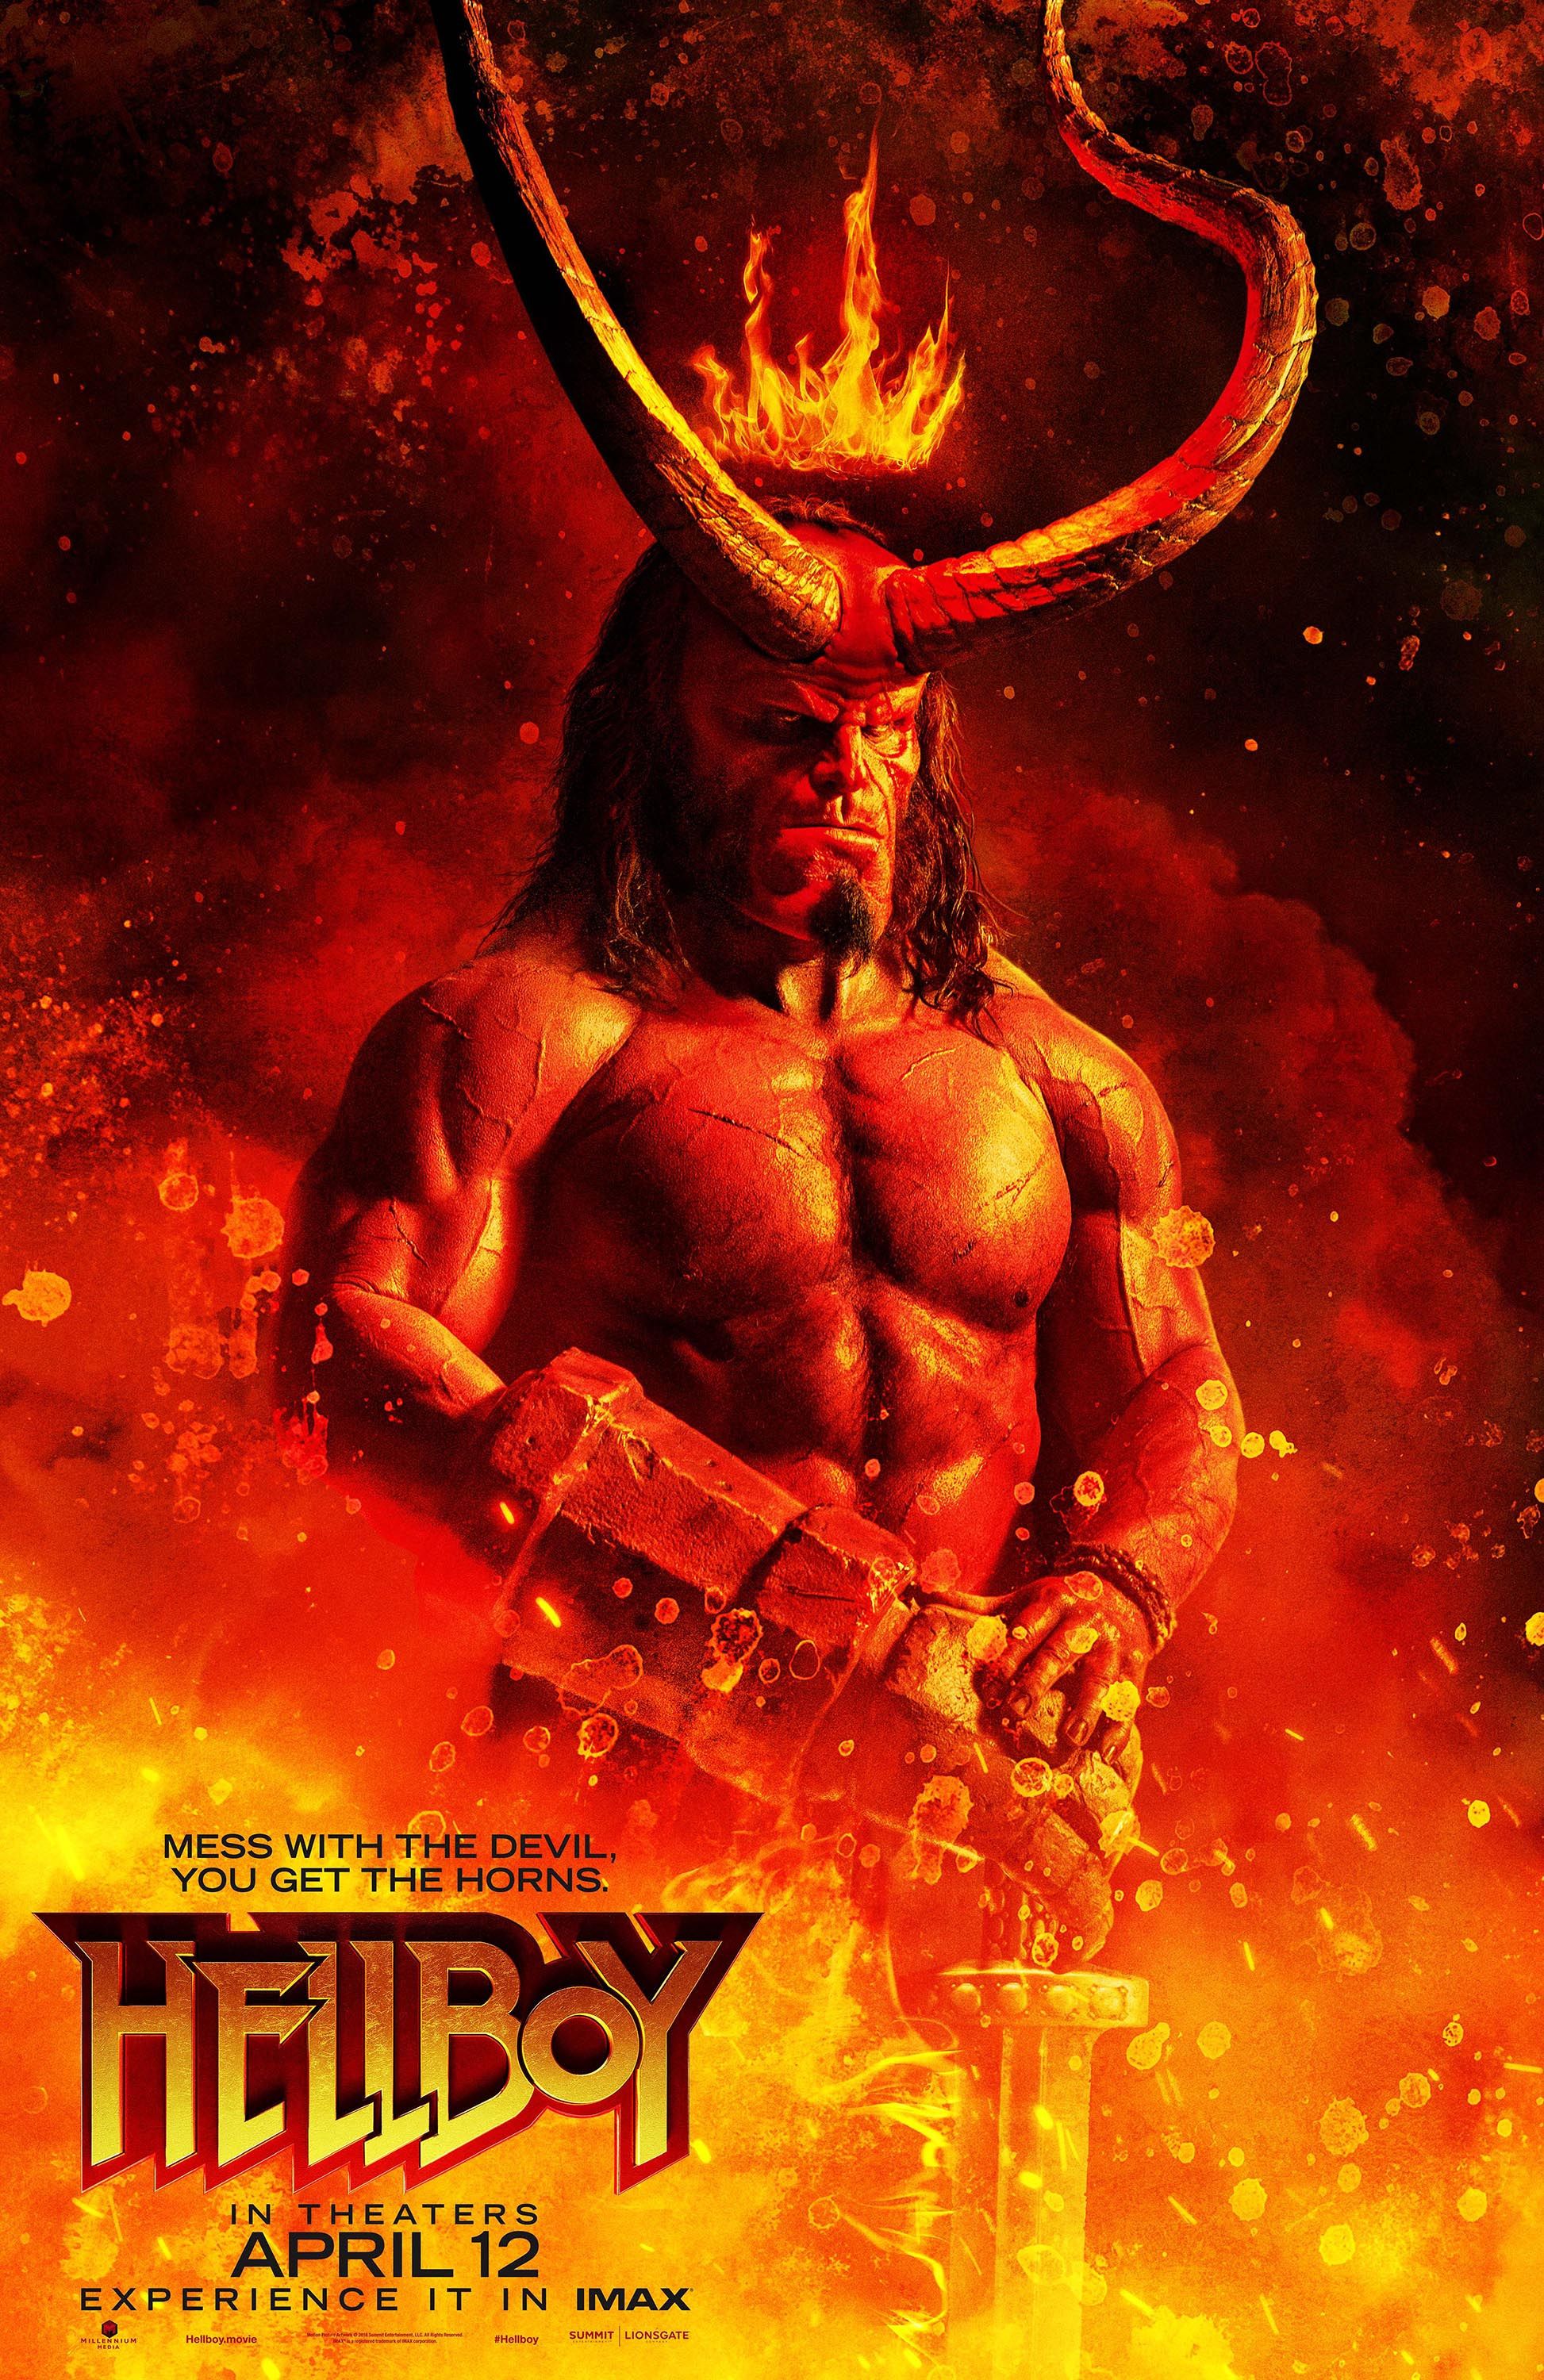 Stiahni si Filmy s titulkama Hellboy (2019)[HDRip] = CSFD 58%